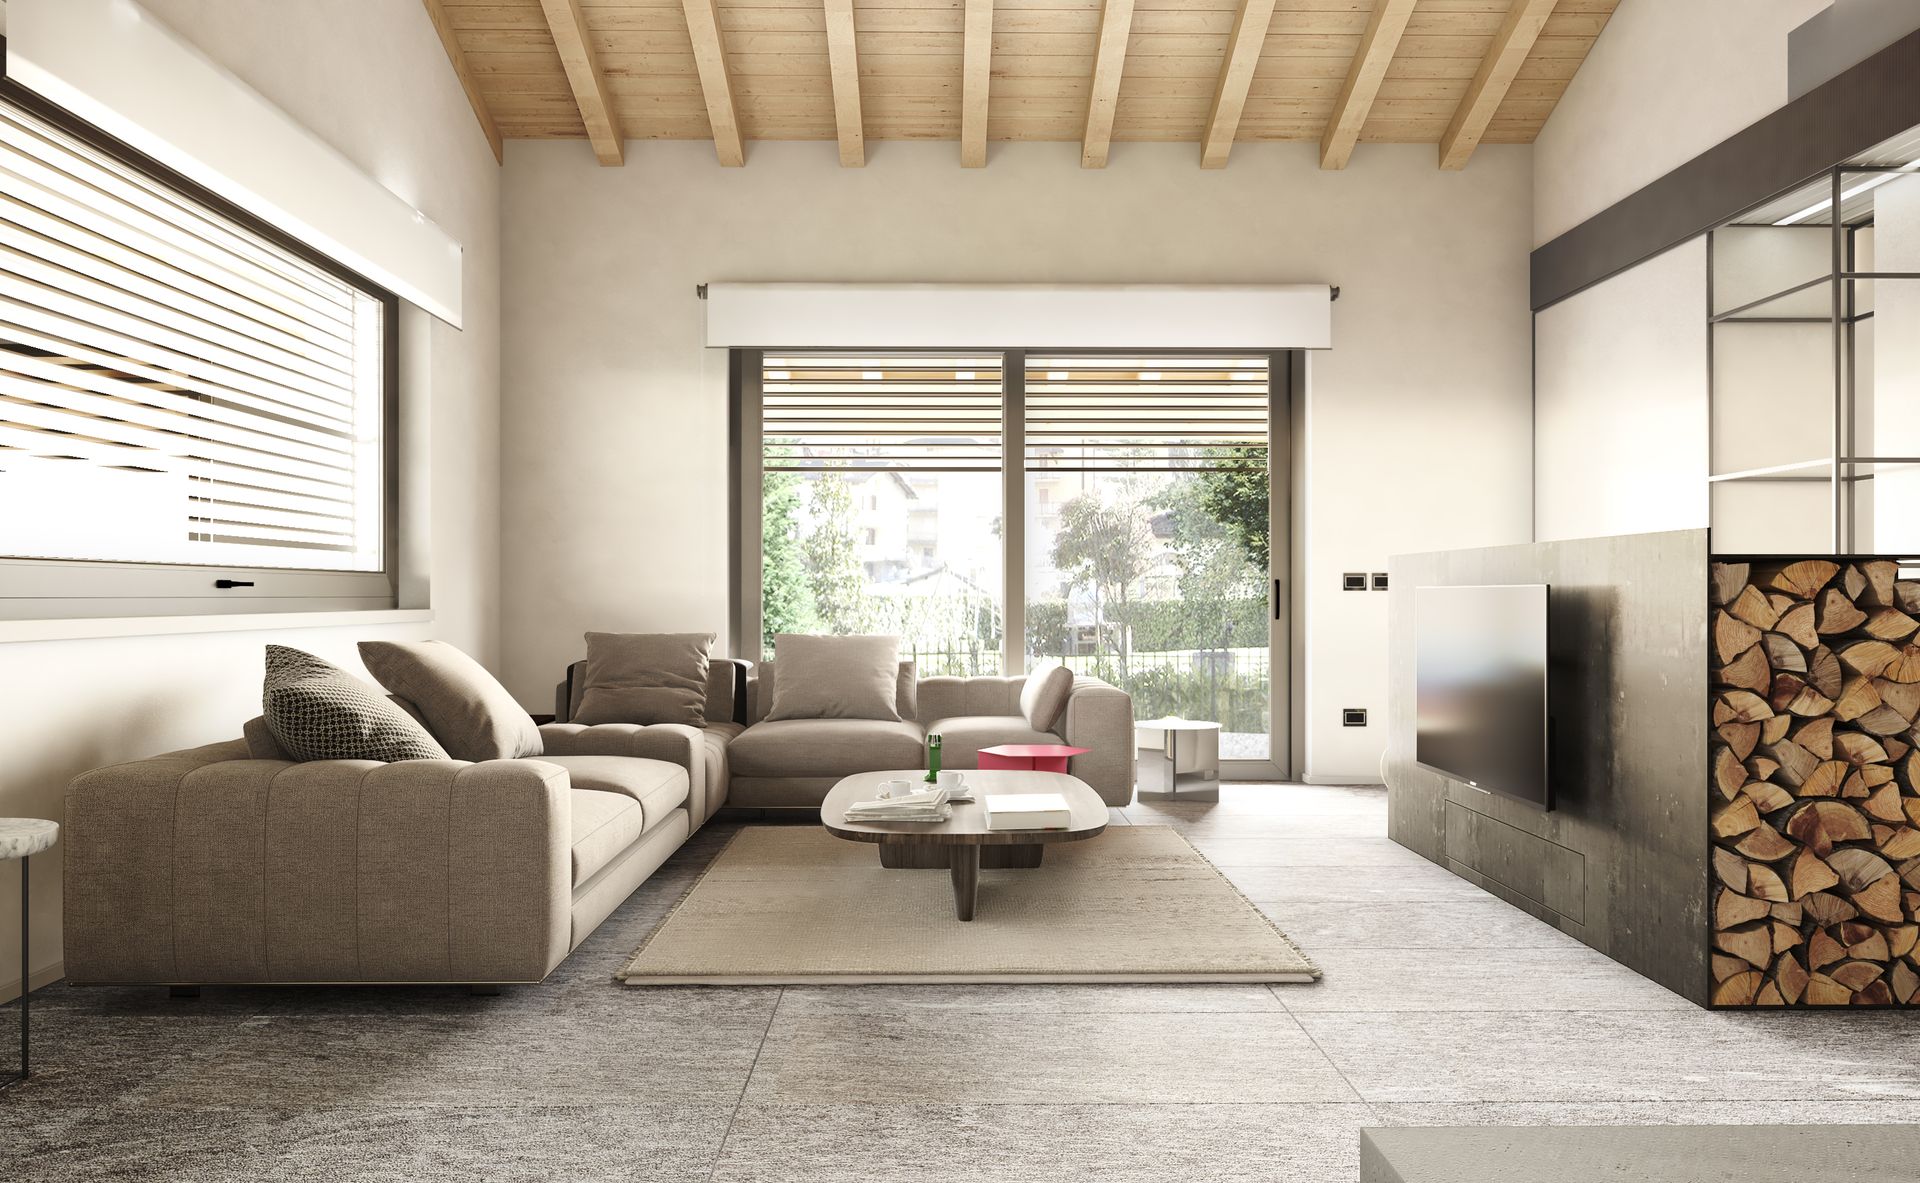 Interior design project, new modern loft Bergamo, Brescia, Milan, Lake Como, London, New York, Paris. Officina Magisafi architecture design - living room rendering